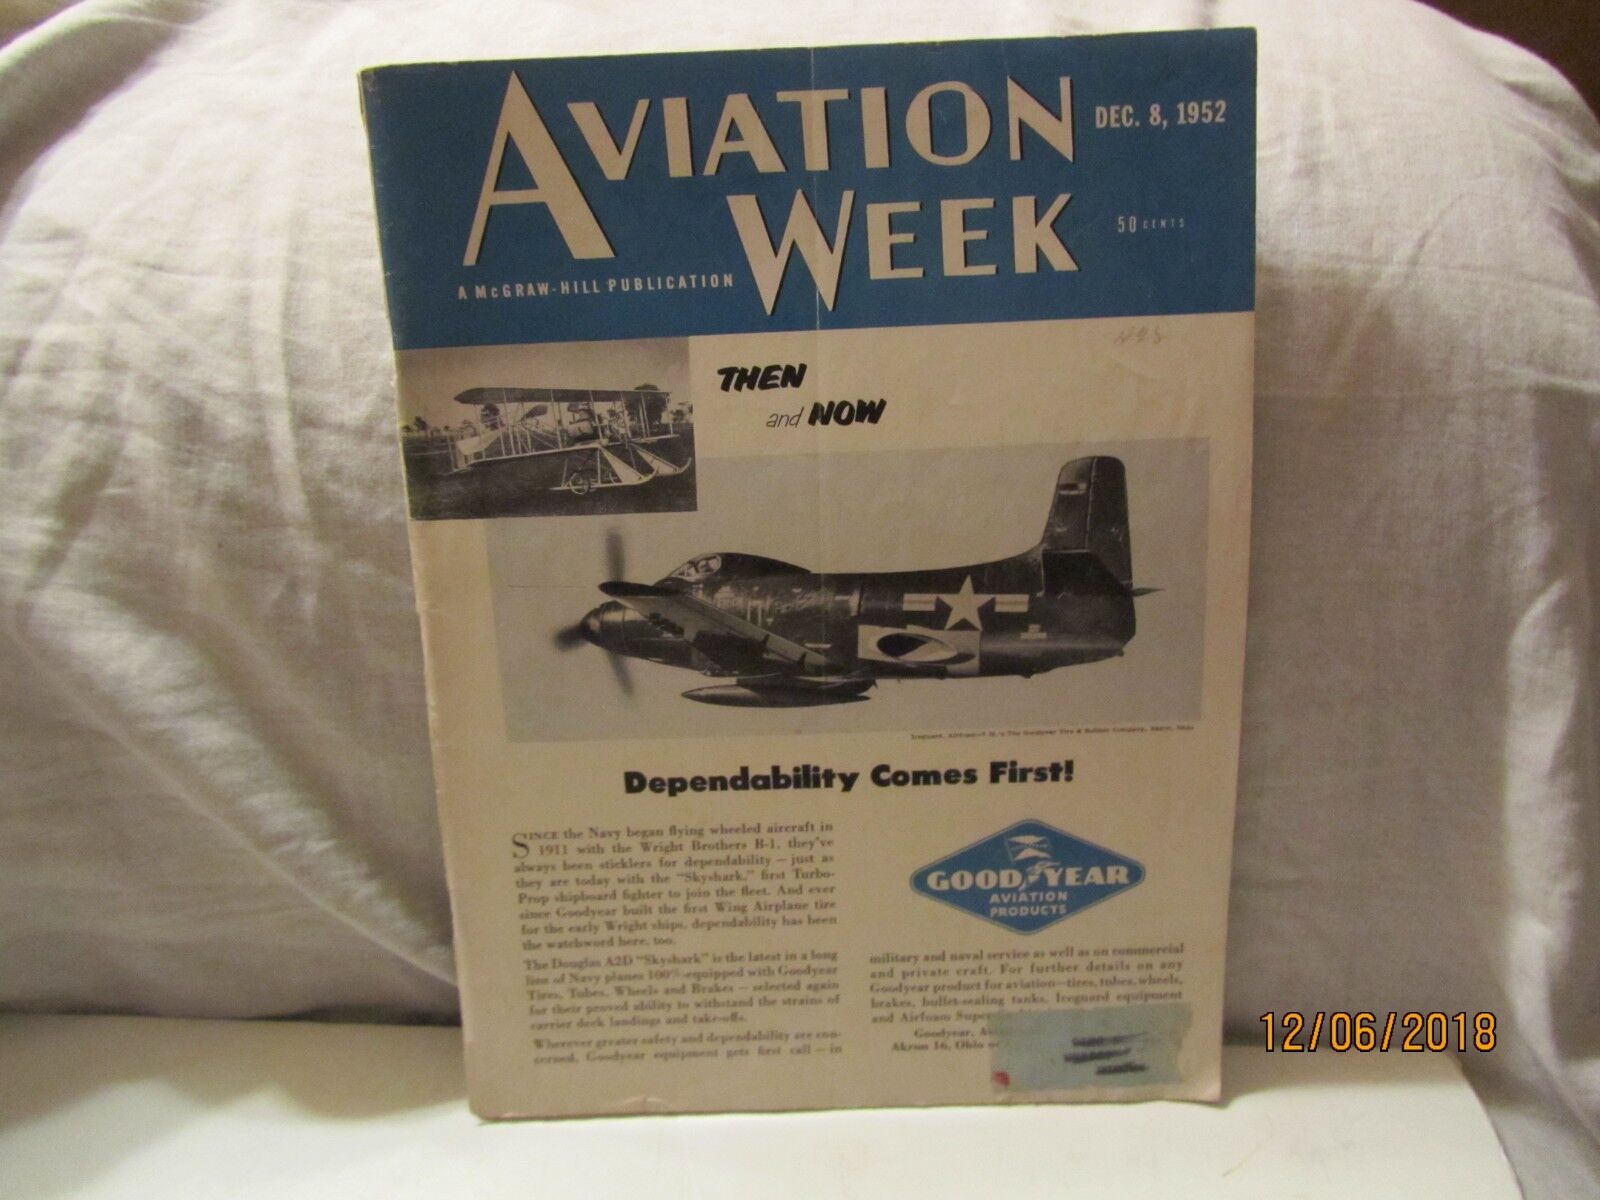 Dec 8, 1952 Aviation Week Magazine by McGraw-Hill Publication